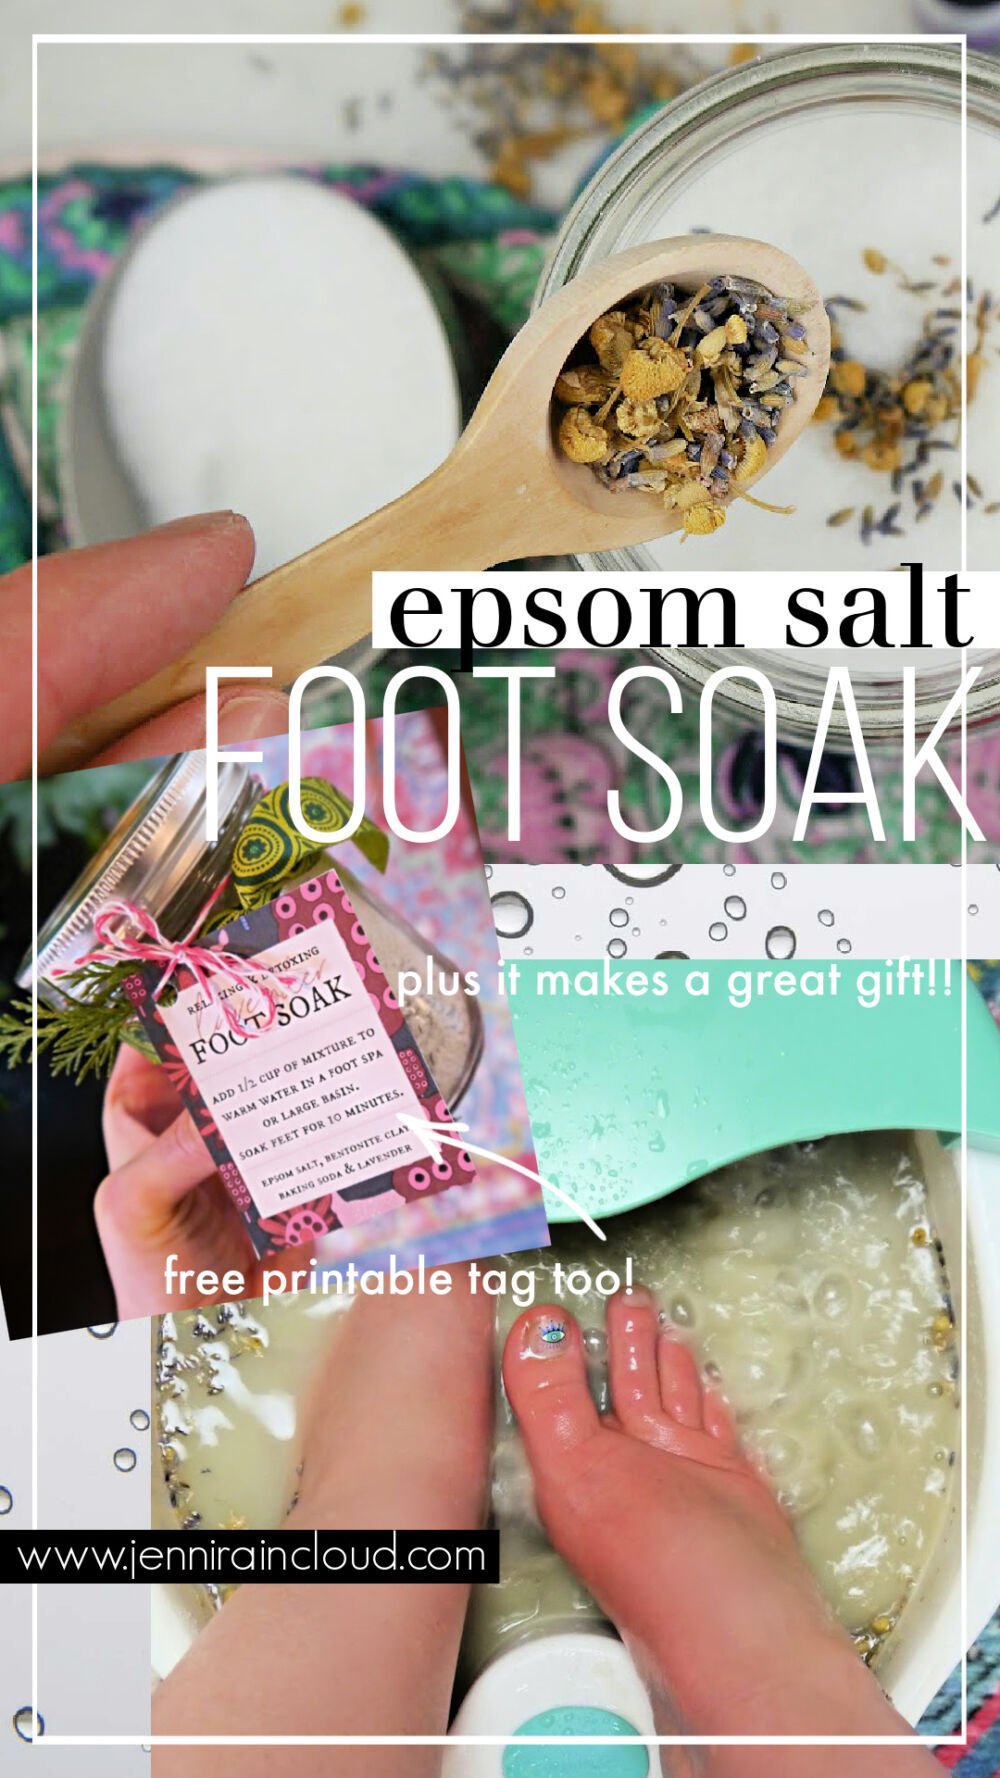 3 pictures of Epsom Salt foot soak for Pinterest.